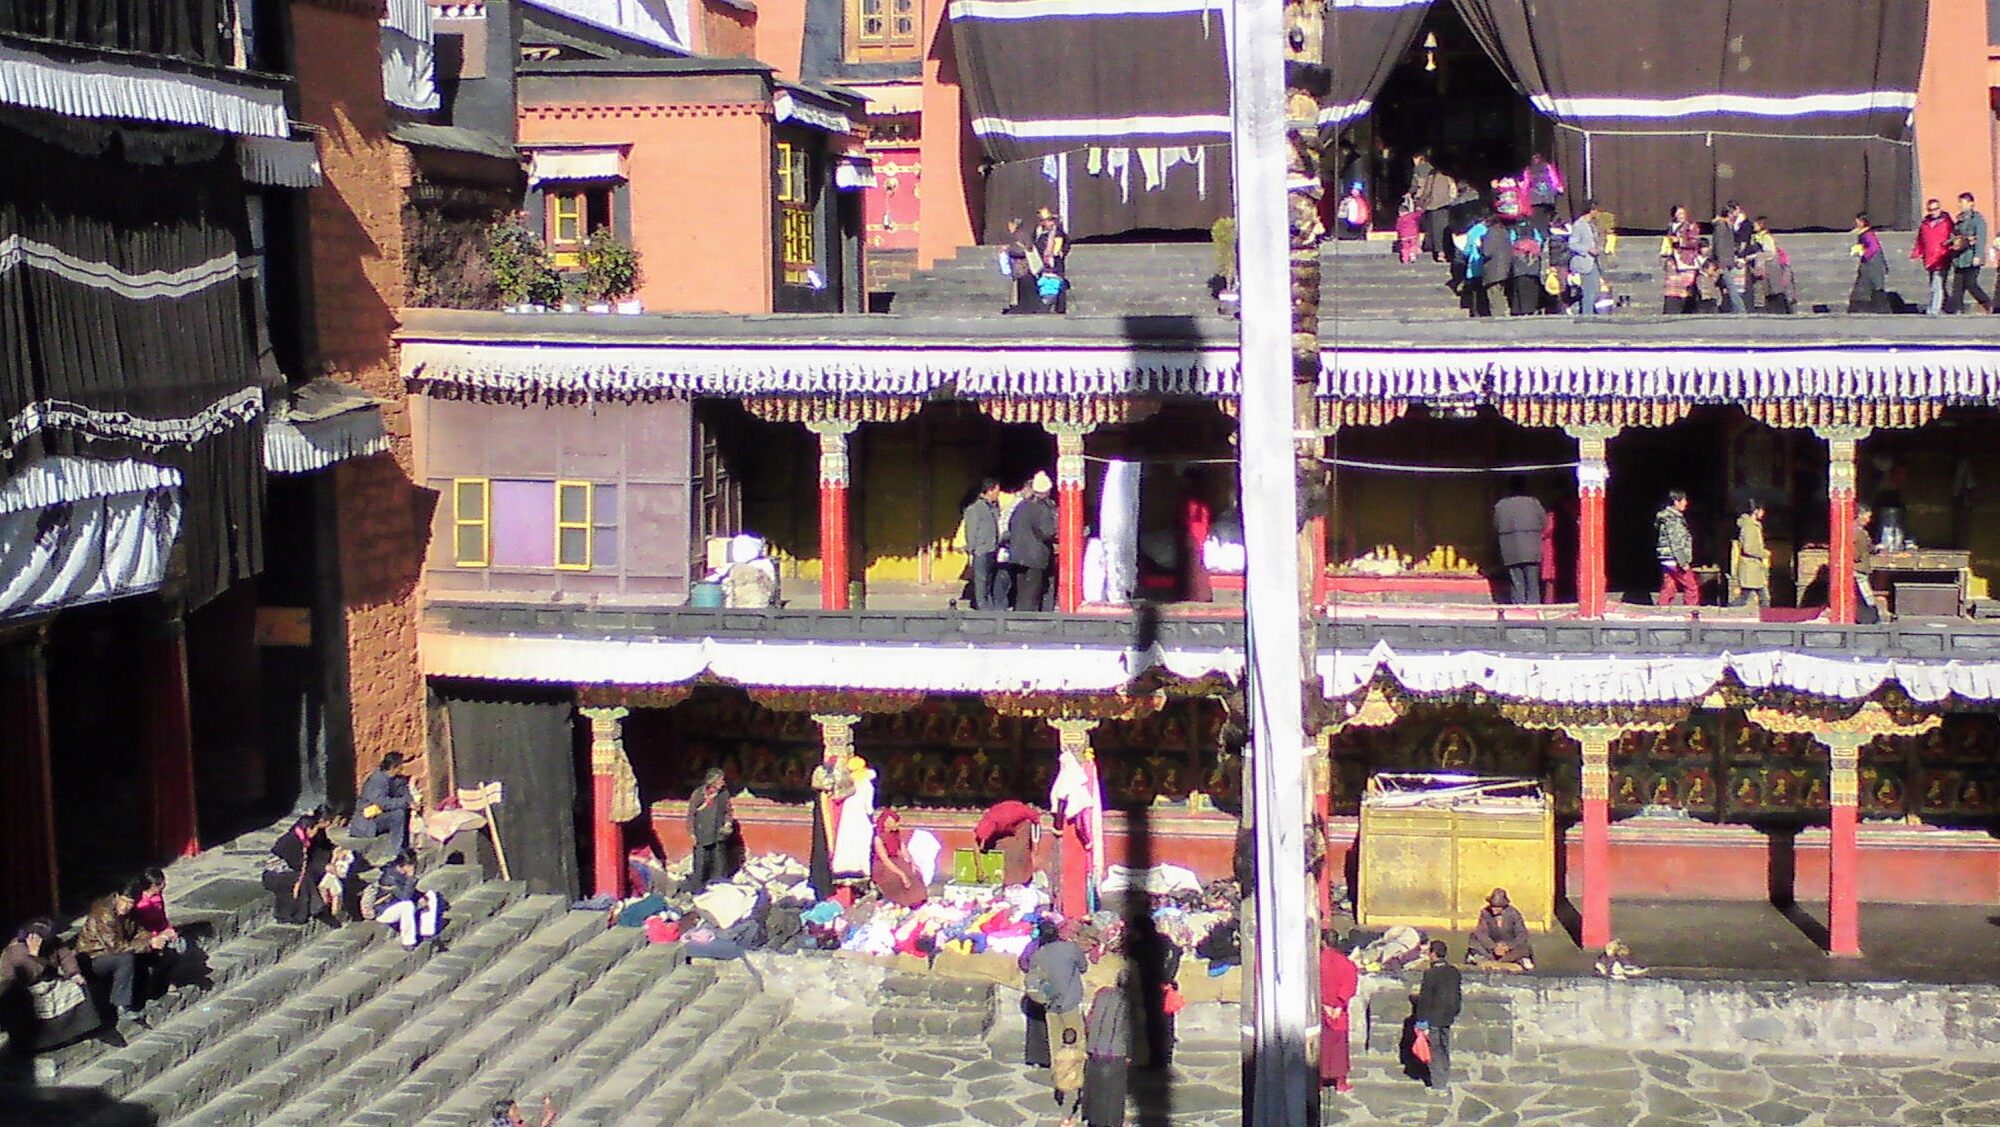 Image – ‘Pilgrims End’ - Tashilhunpo Monastery, Shigatse, Tibet - November 2008